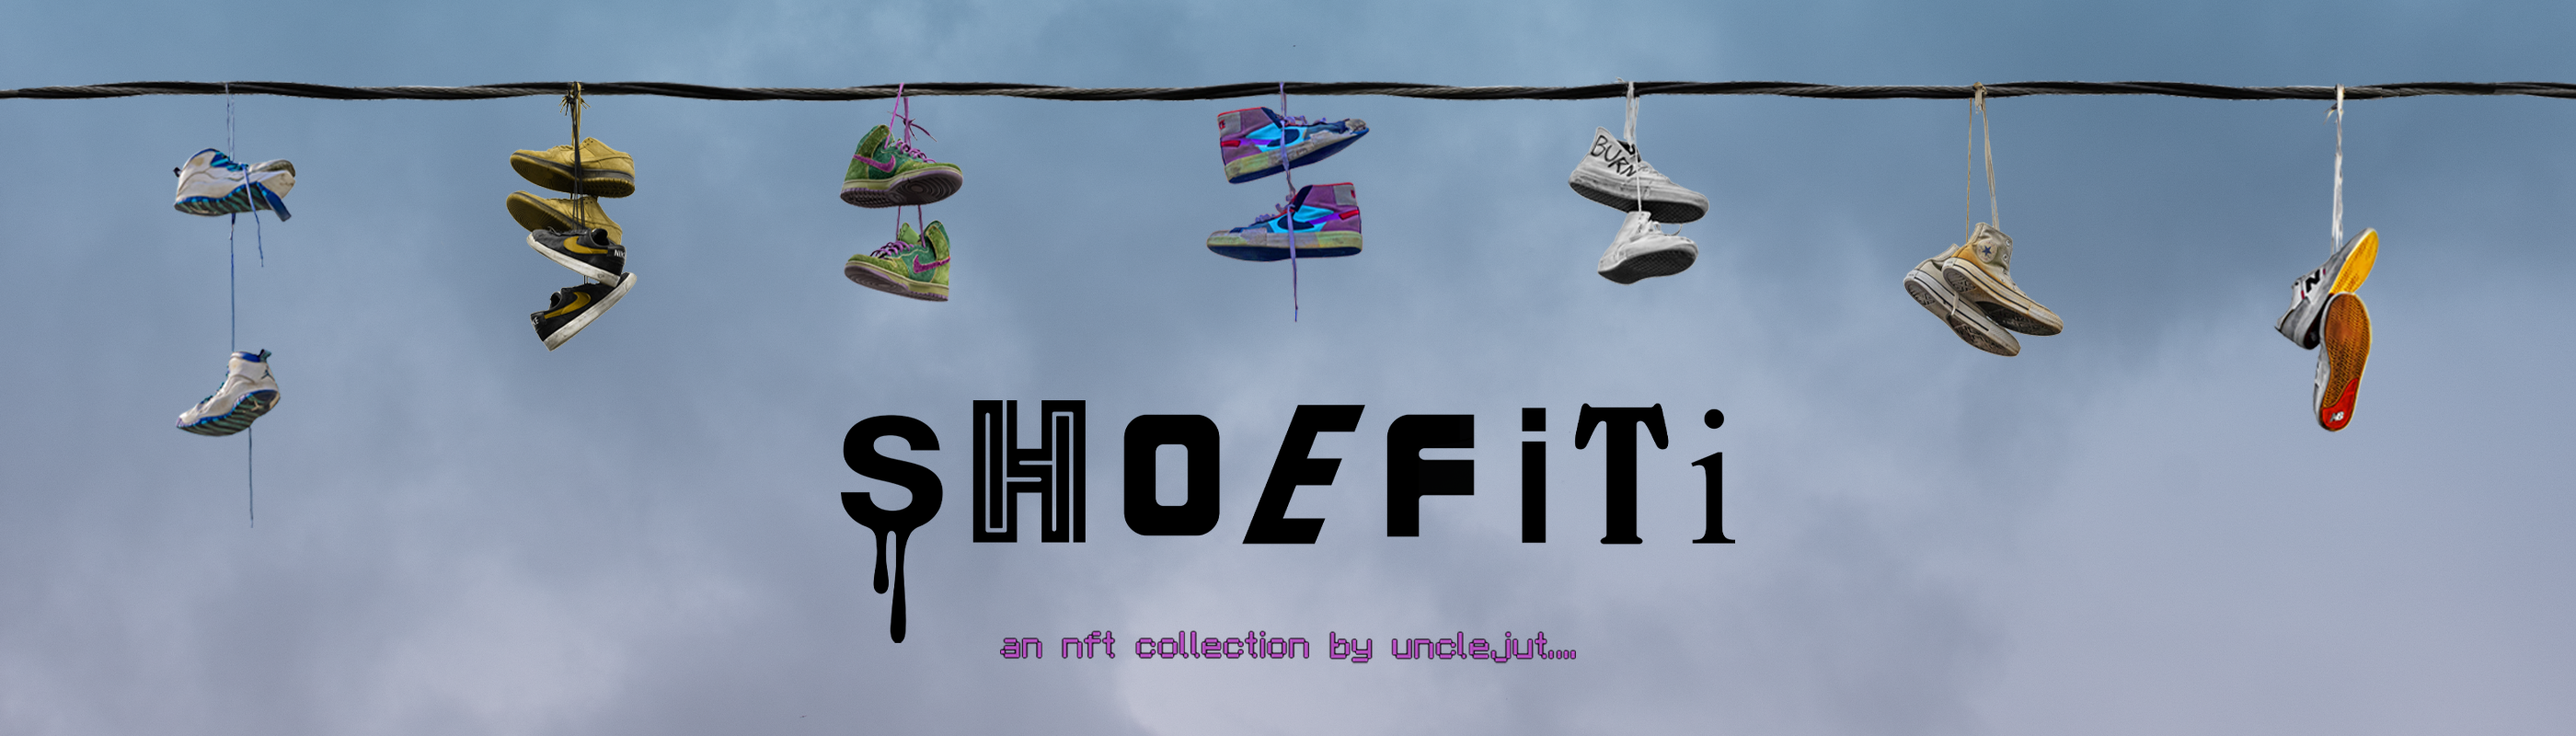 Shoefiti_logo